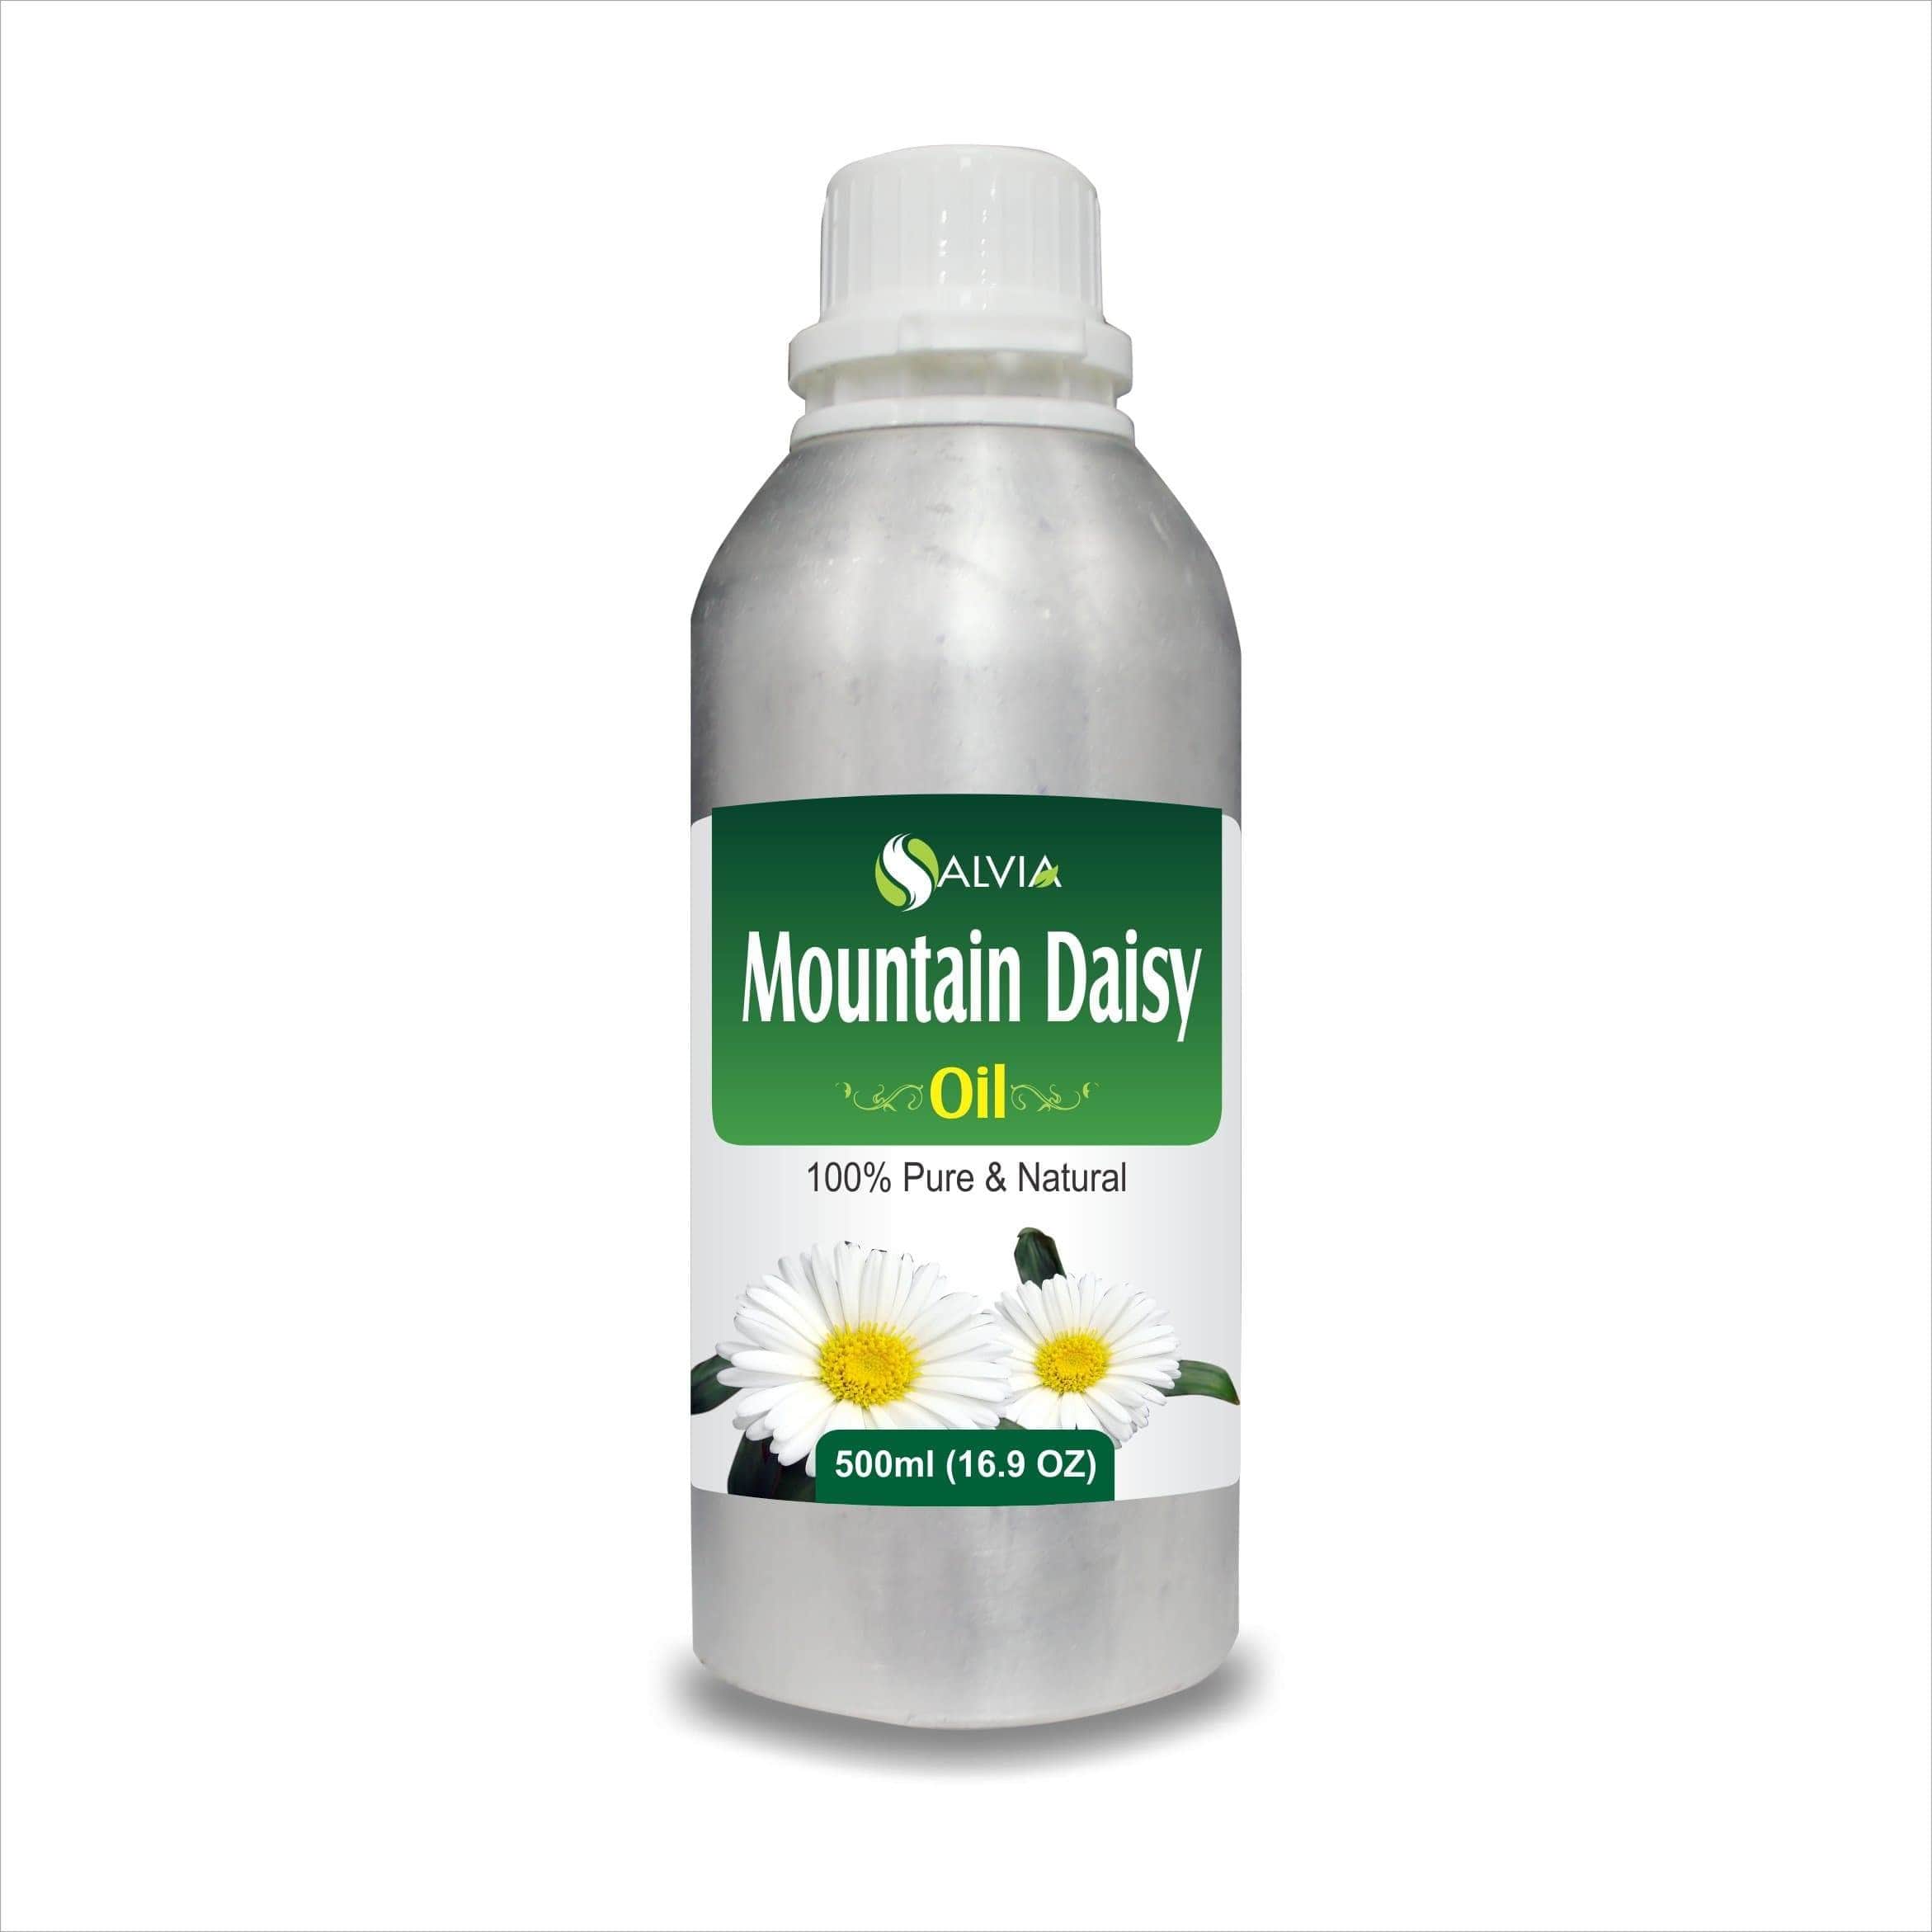 Mountain Daisy Oil